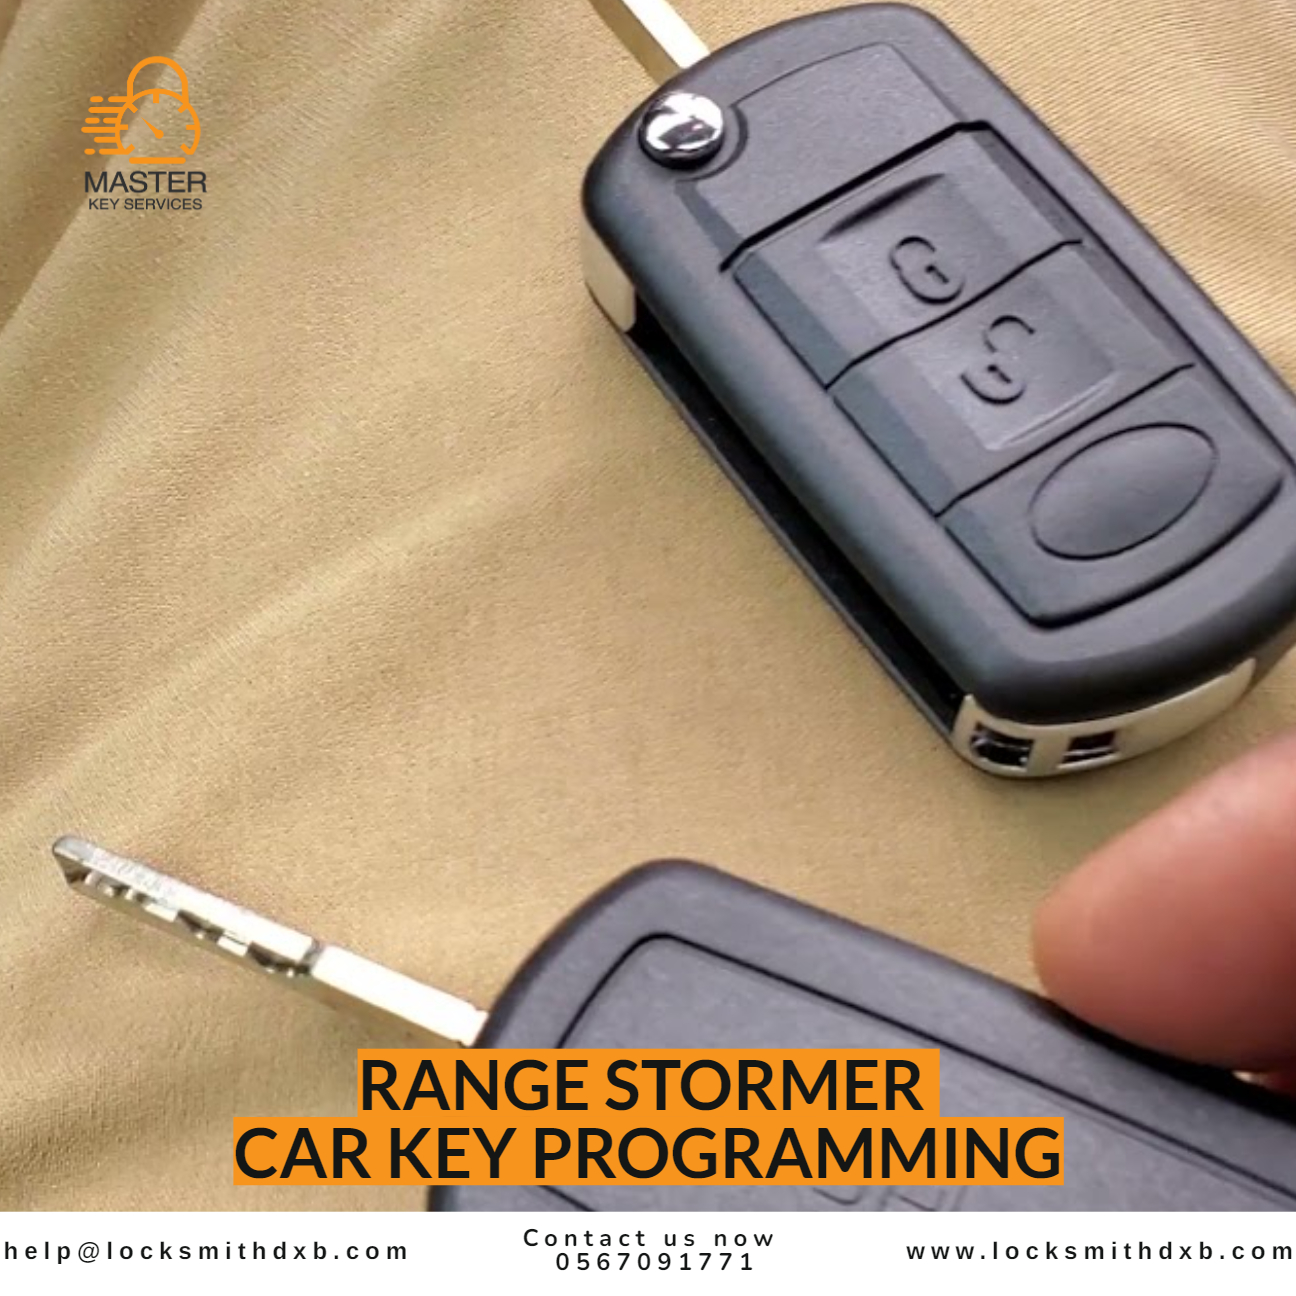 Range Stormer car key programming